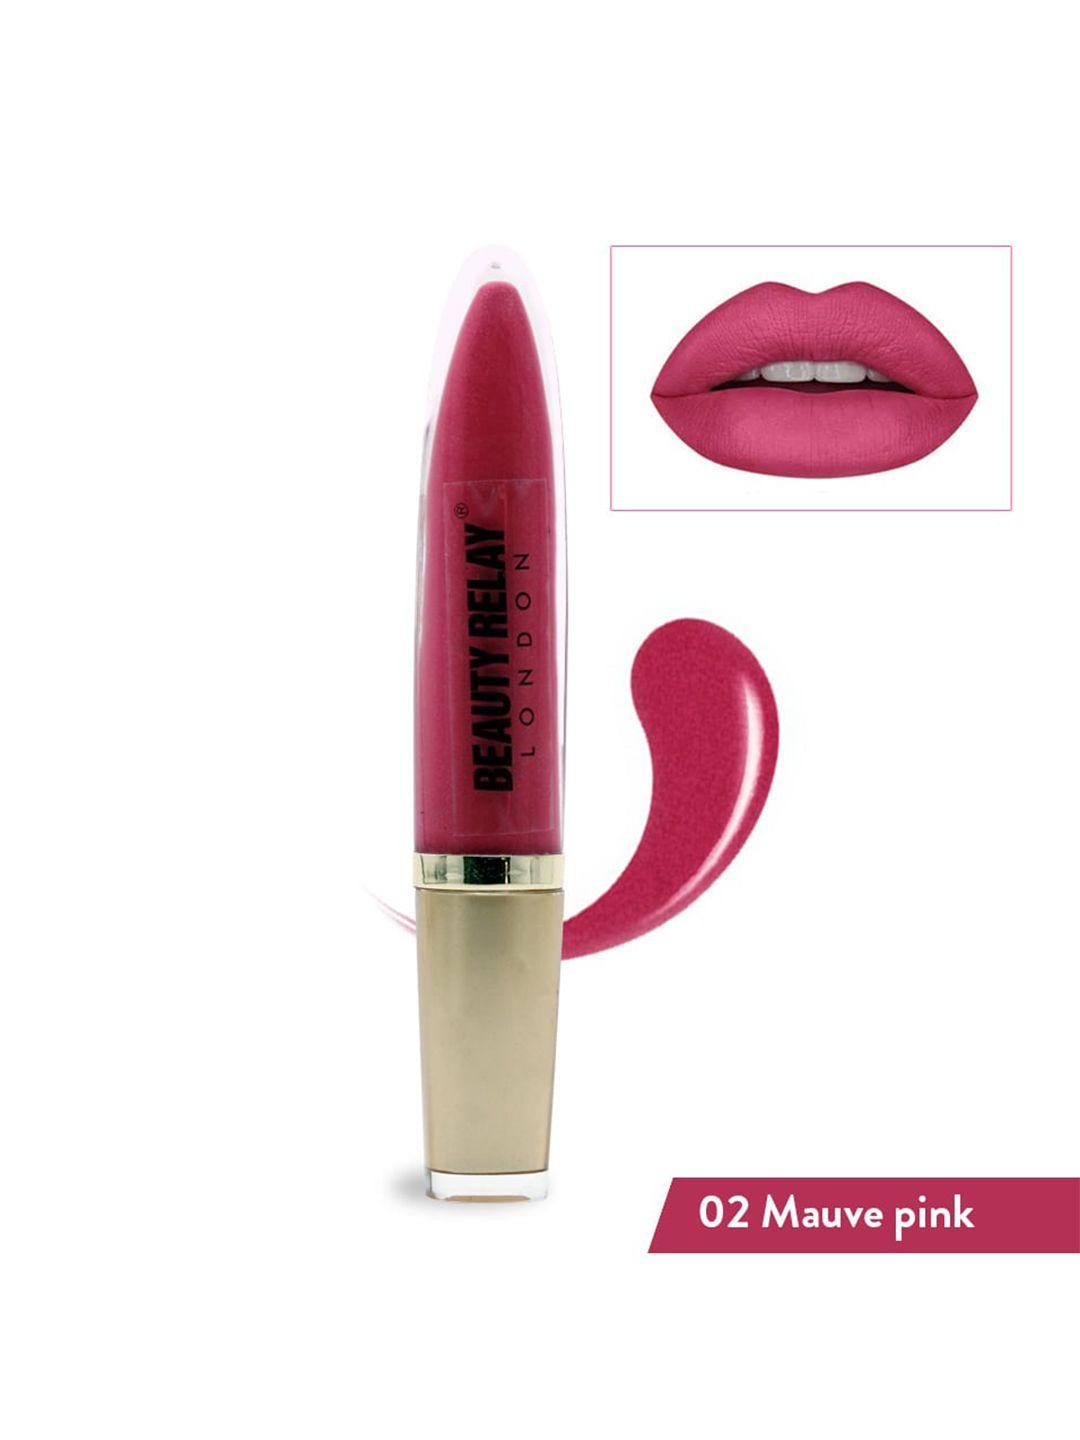 beautyrelay london marker lip & cheek gleam lip gloss 5g - mauve pink